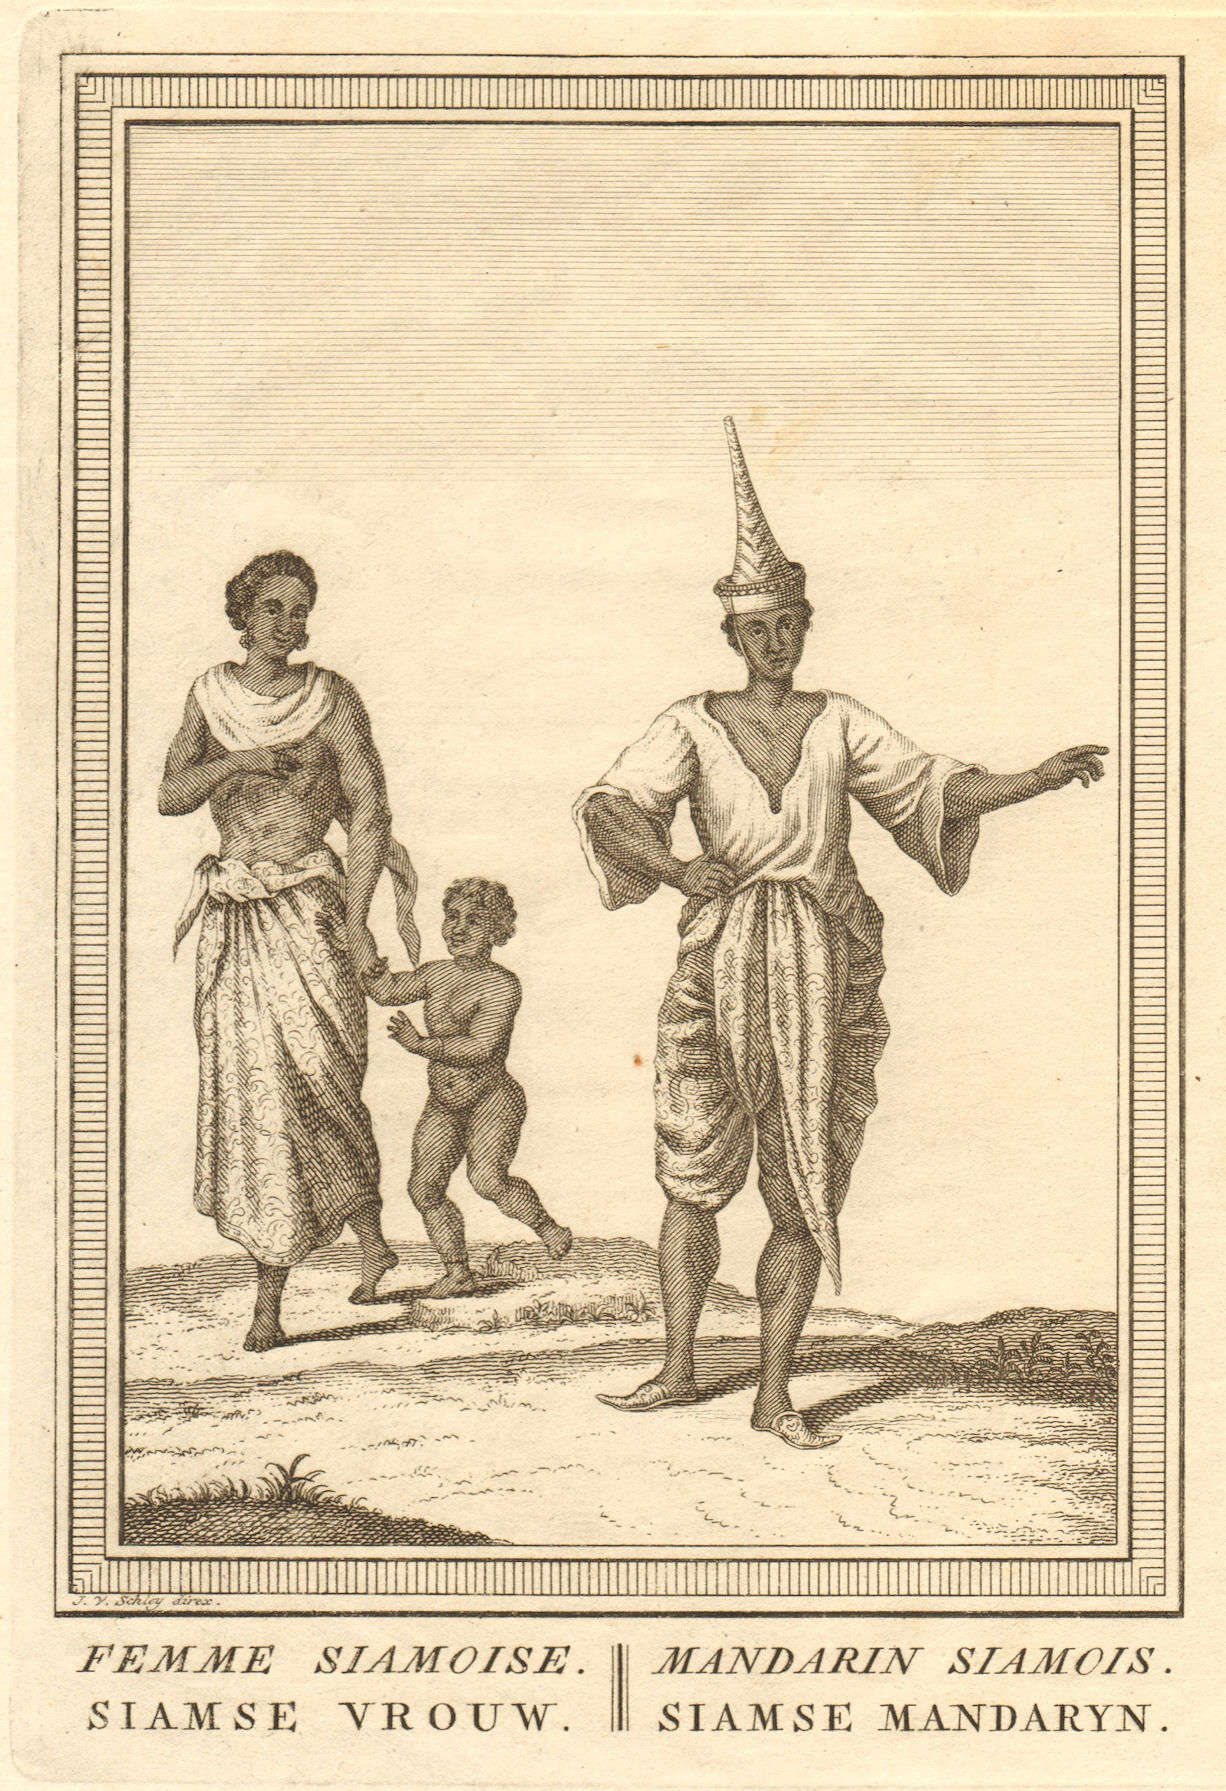 'Femme Siamois. Mandarin Siamois'. Thailand Siamese woman mandarin. SCHLEY 1755